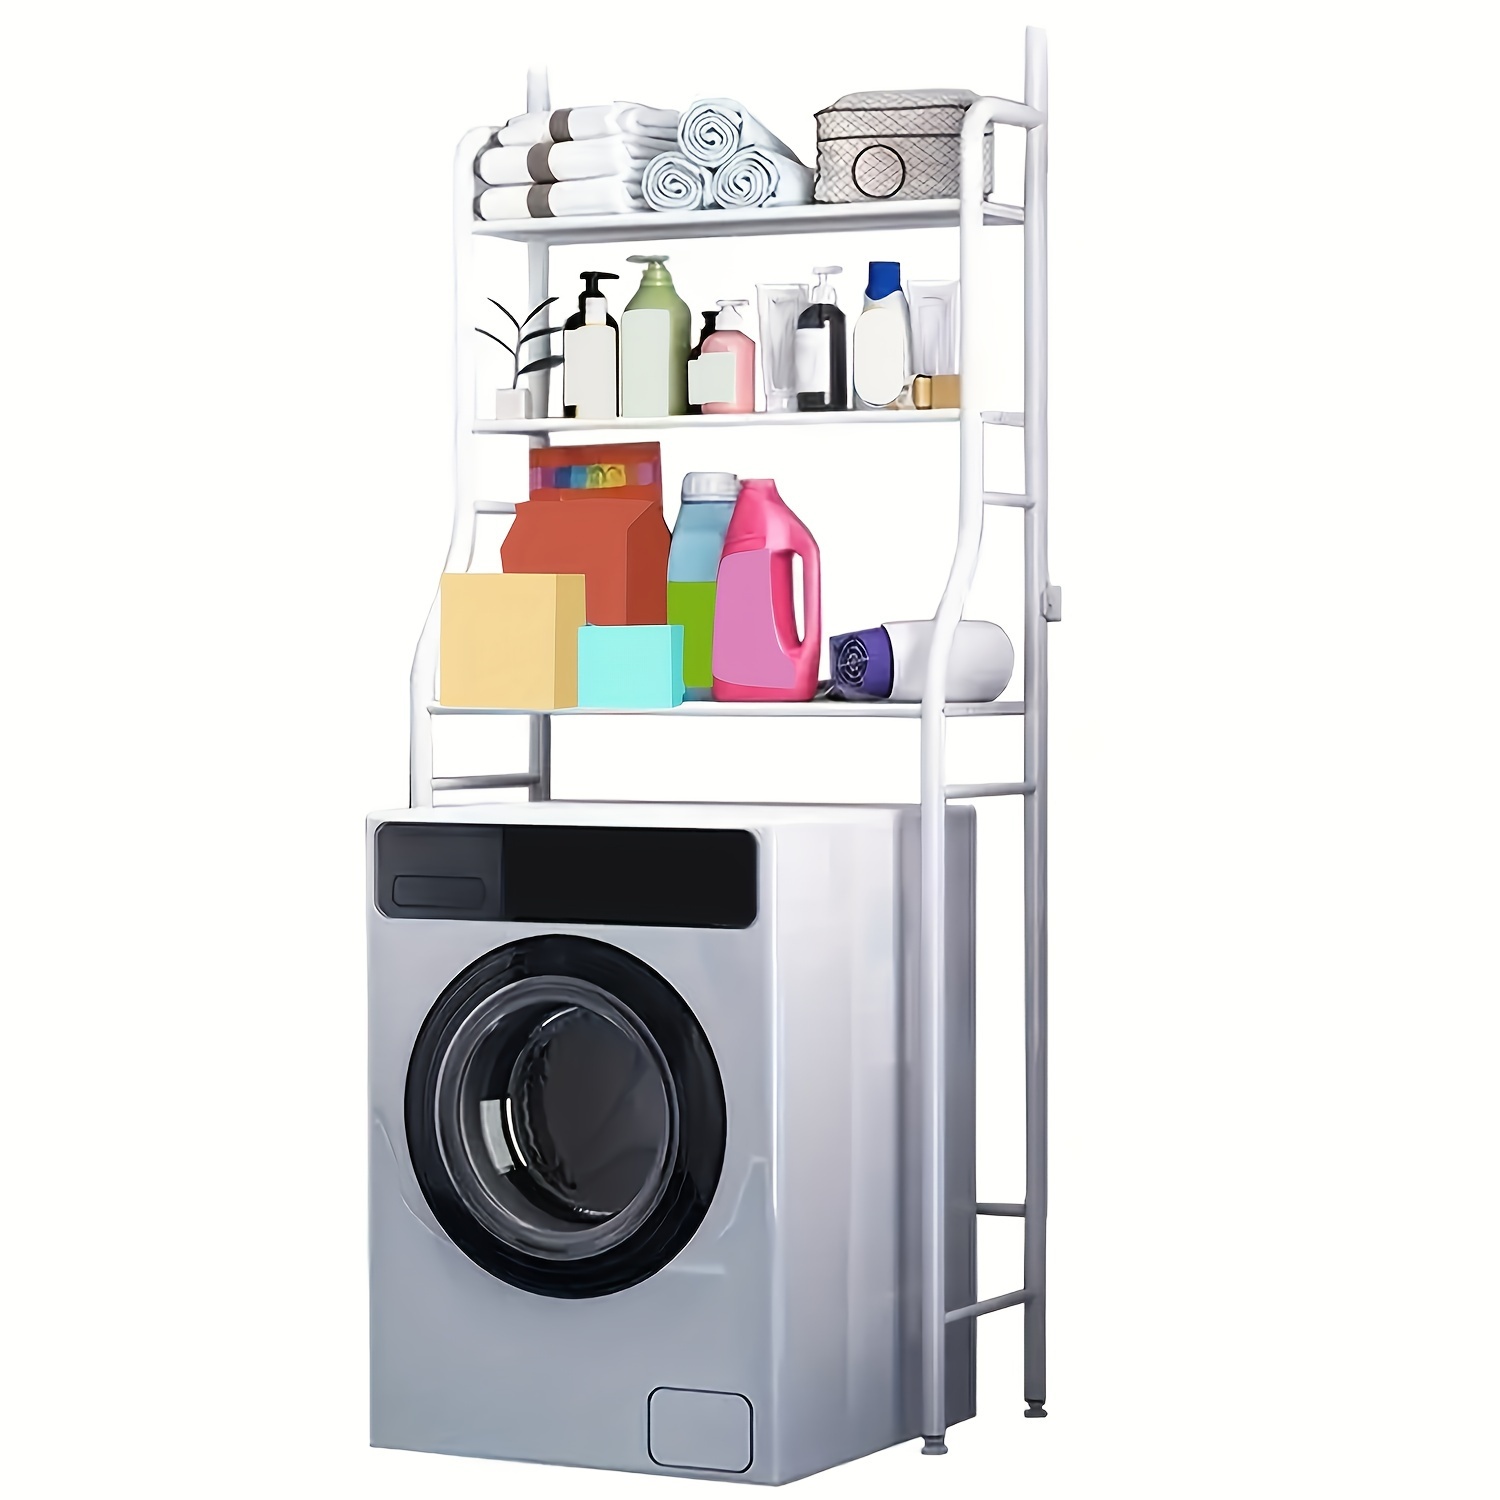 Soporte para lavadora móvil, base ajustable para lavadora, telescópico,  base móvil multifuncional giratoria de 360°, soporte para muebles con